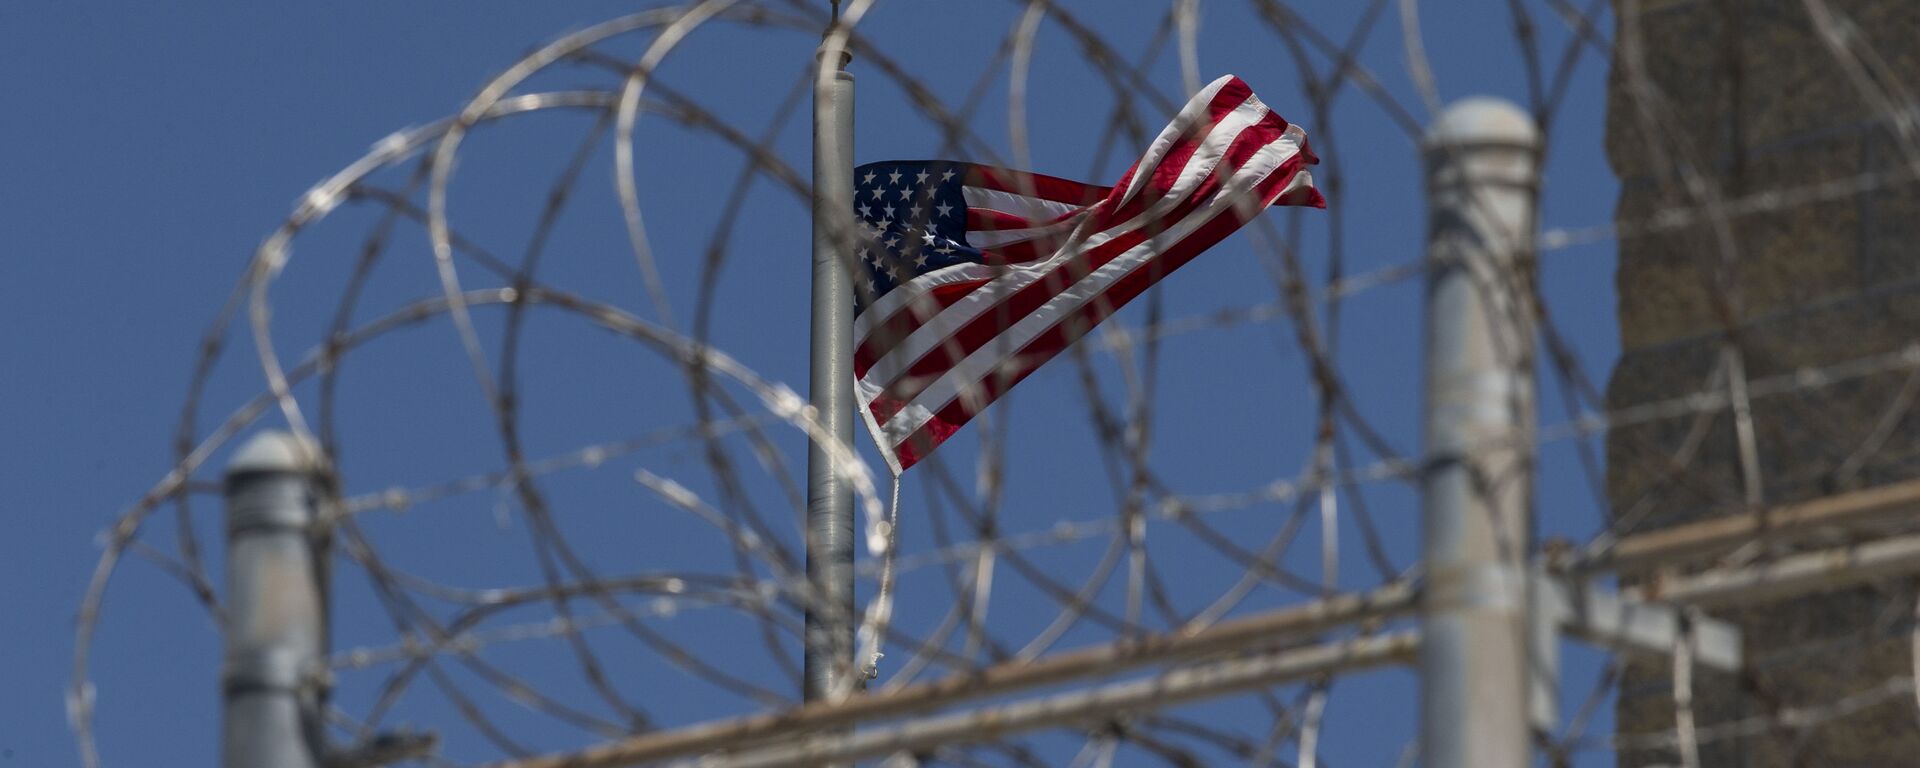 ASV cietums Guantanamo - Sputnik Latvija, 1920, 02.11.2021